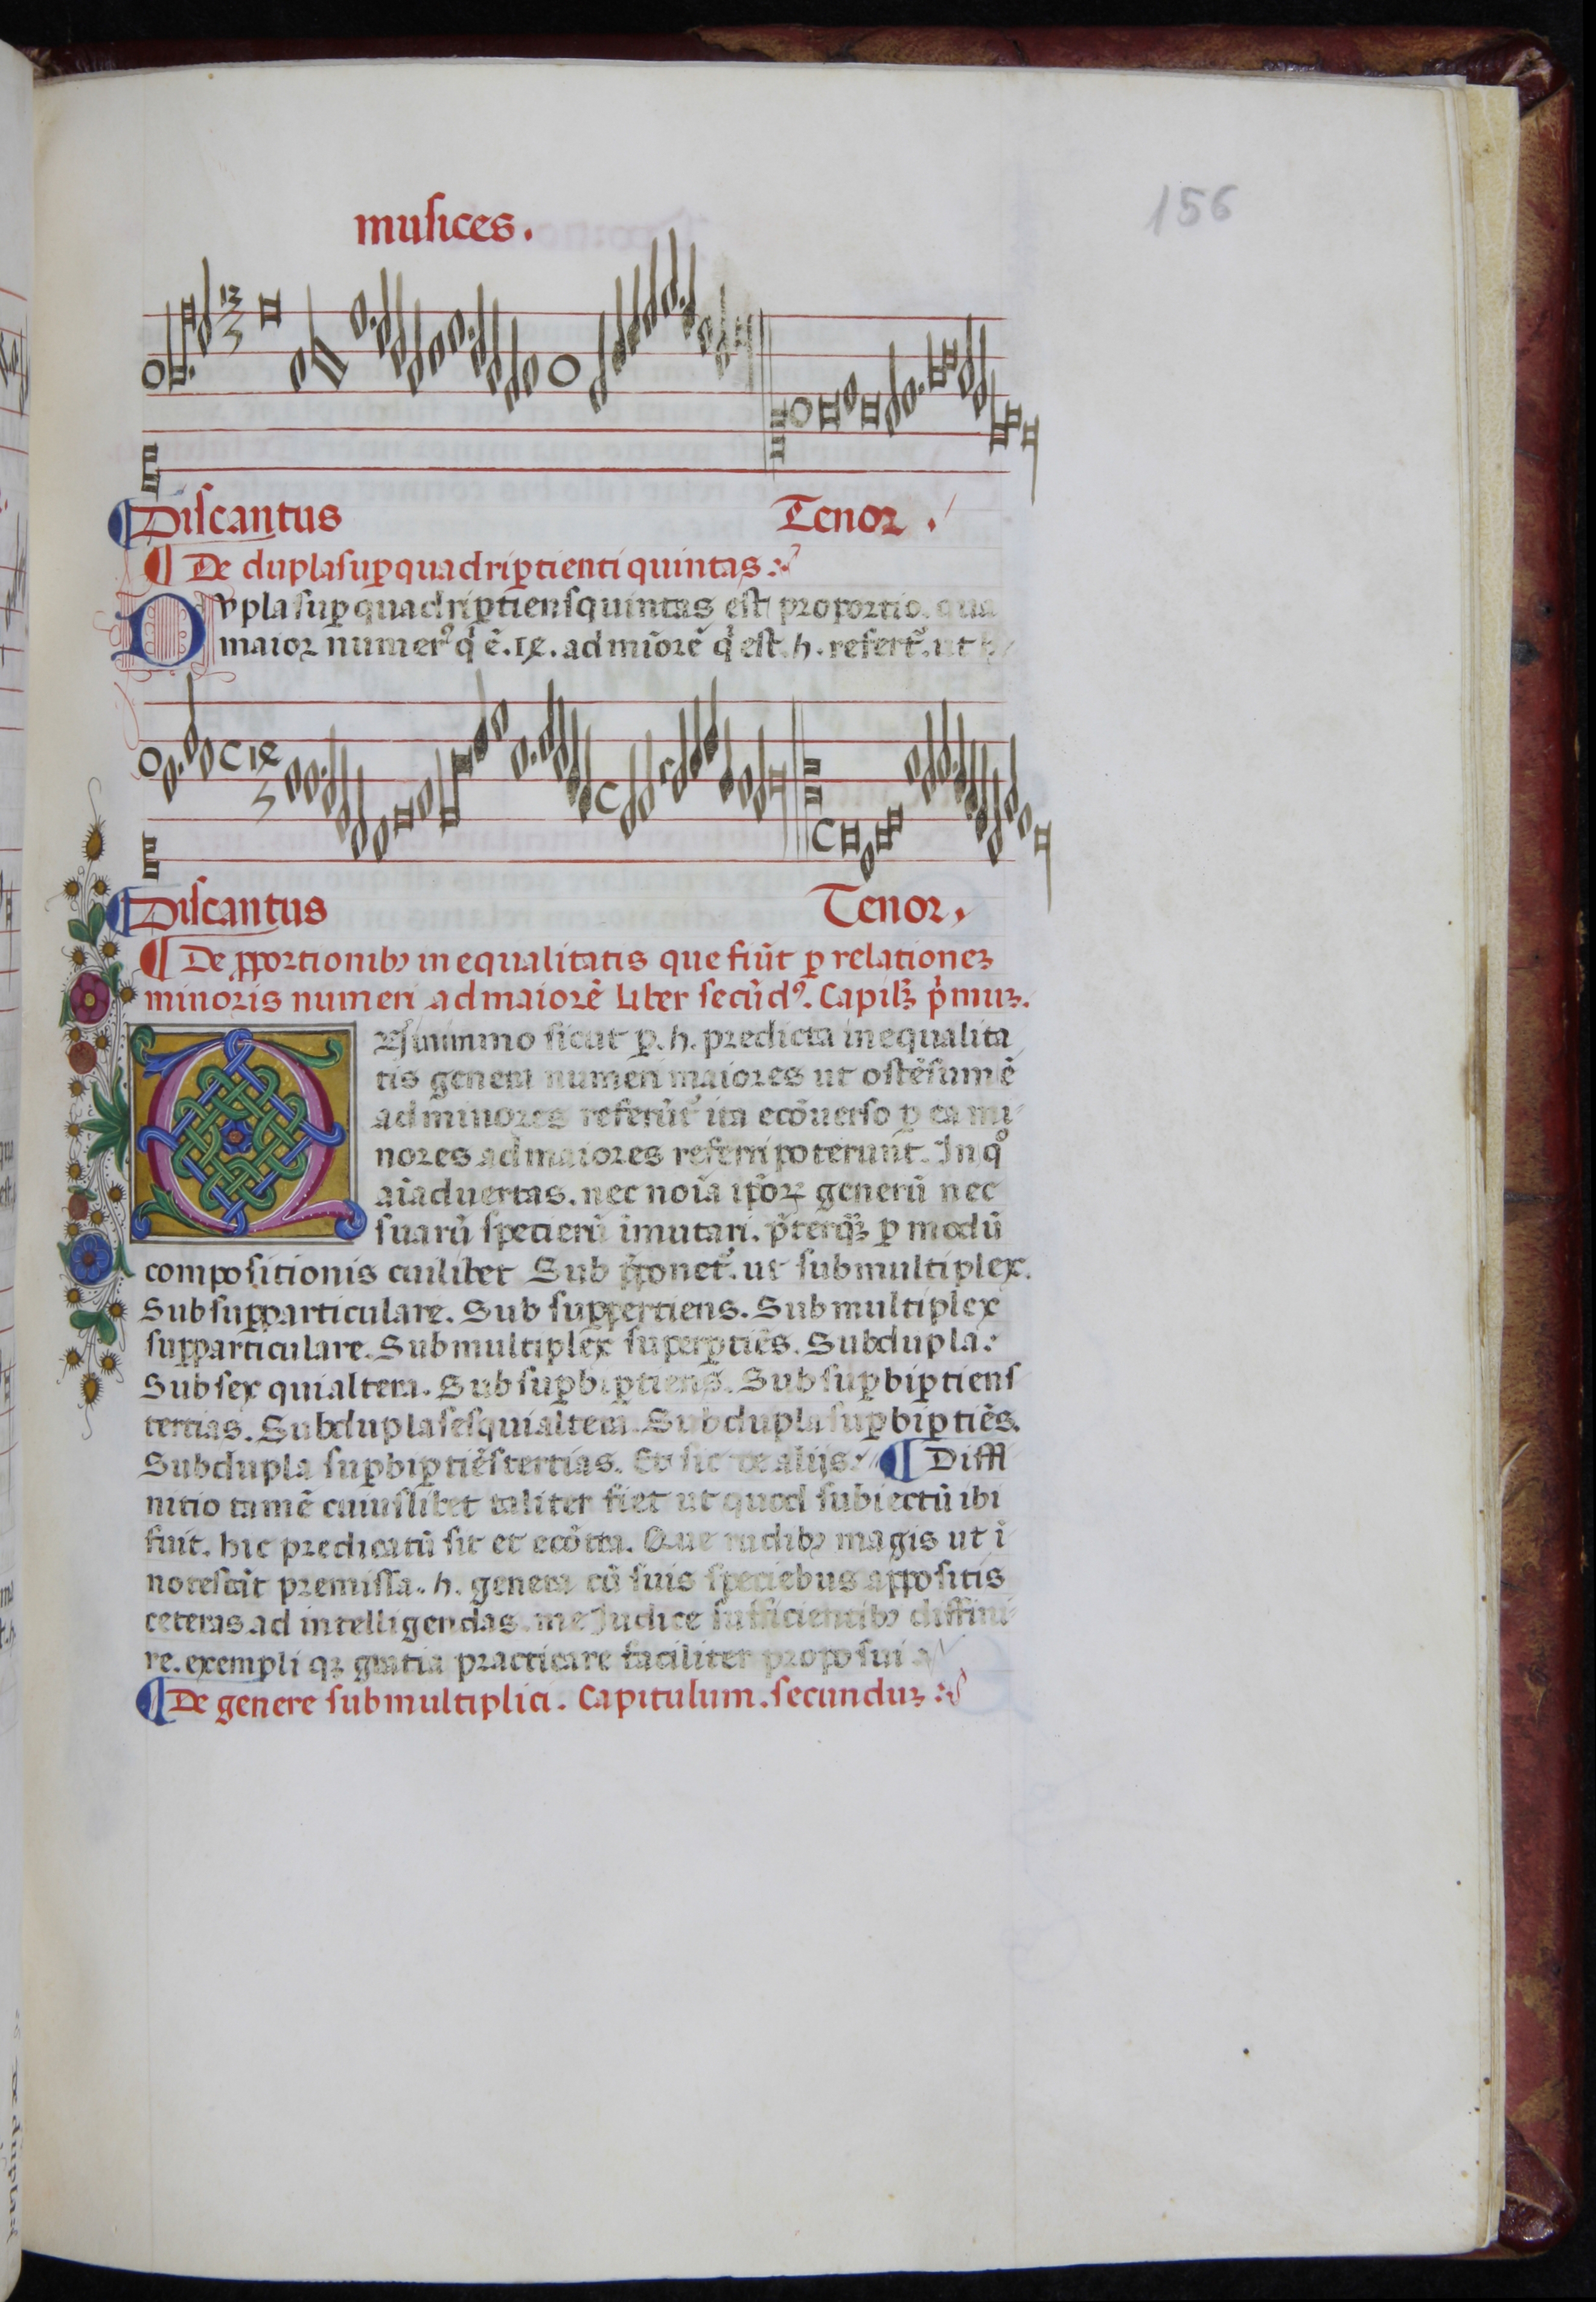 Universitat de València, Biblioteca Històrica, MS 835 [olim 844], fol. 156r. Source: Universitat de València, Biblioteca Històrica.